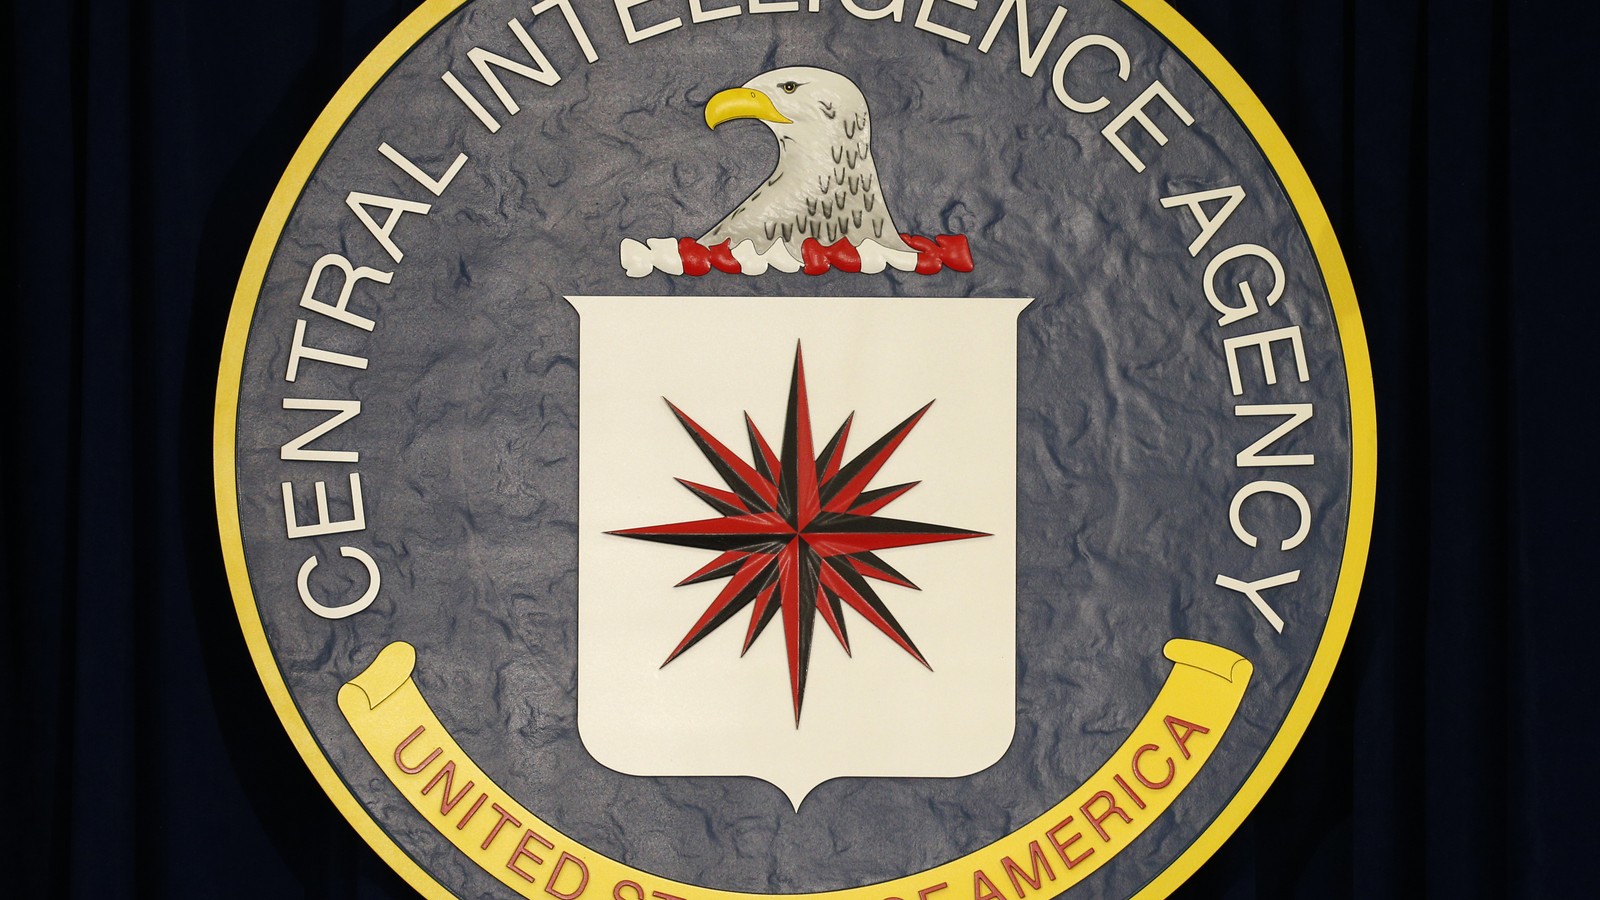 Inside the CIA's black site torture room, CIA